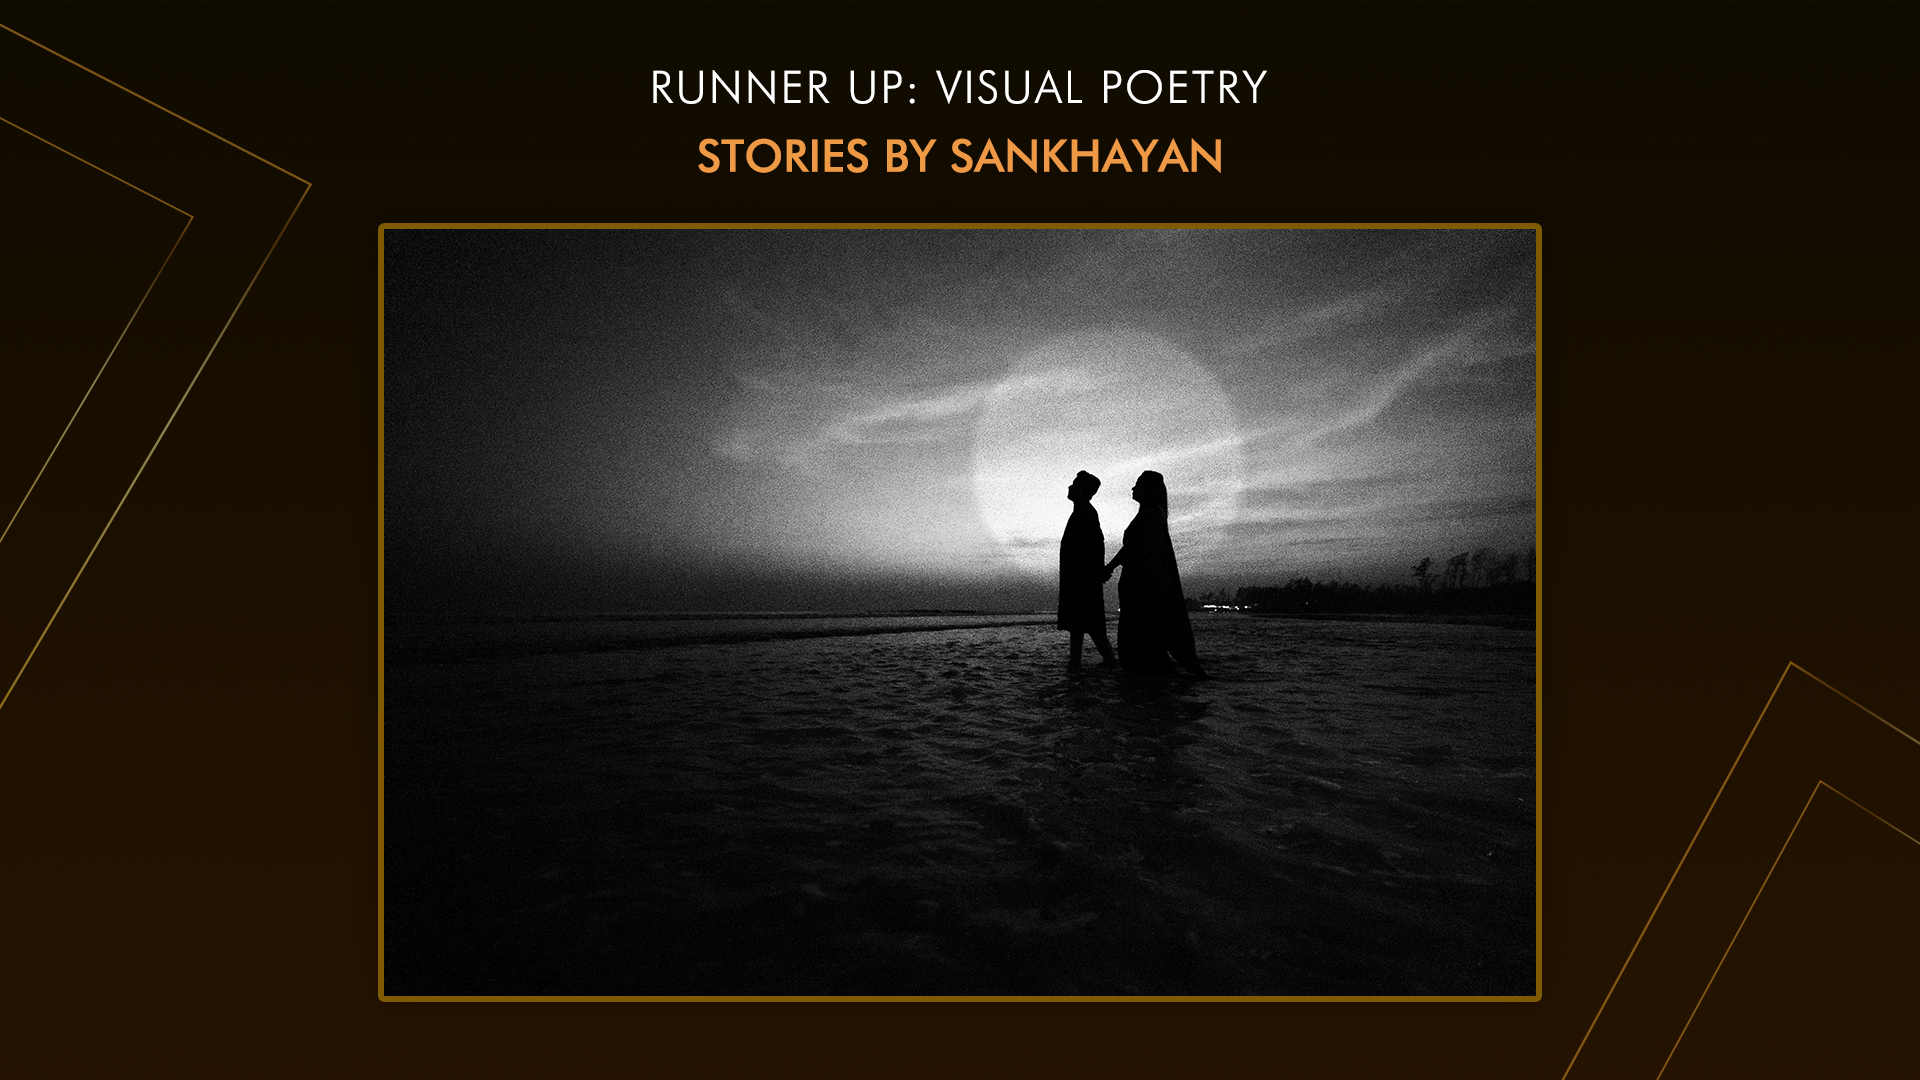 Stories by Sankhayan